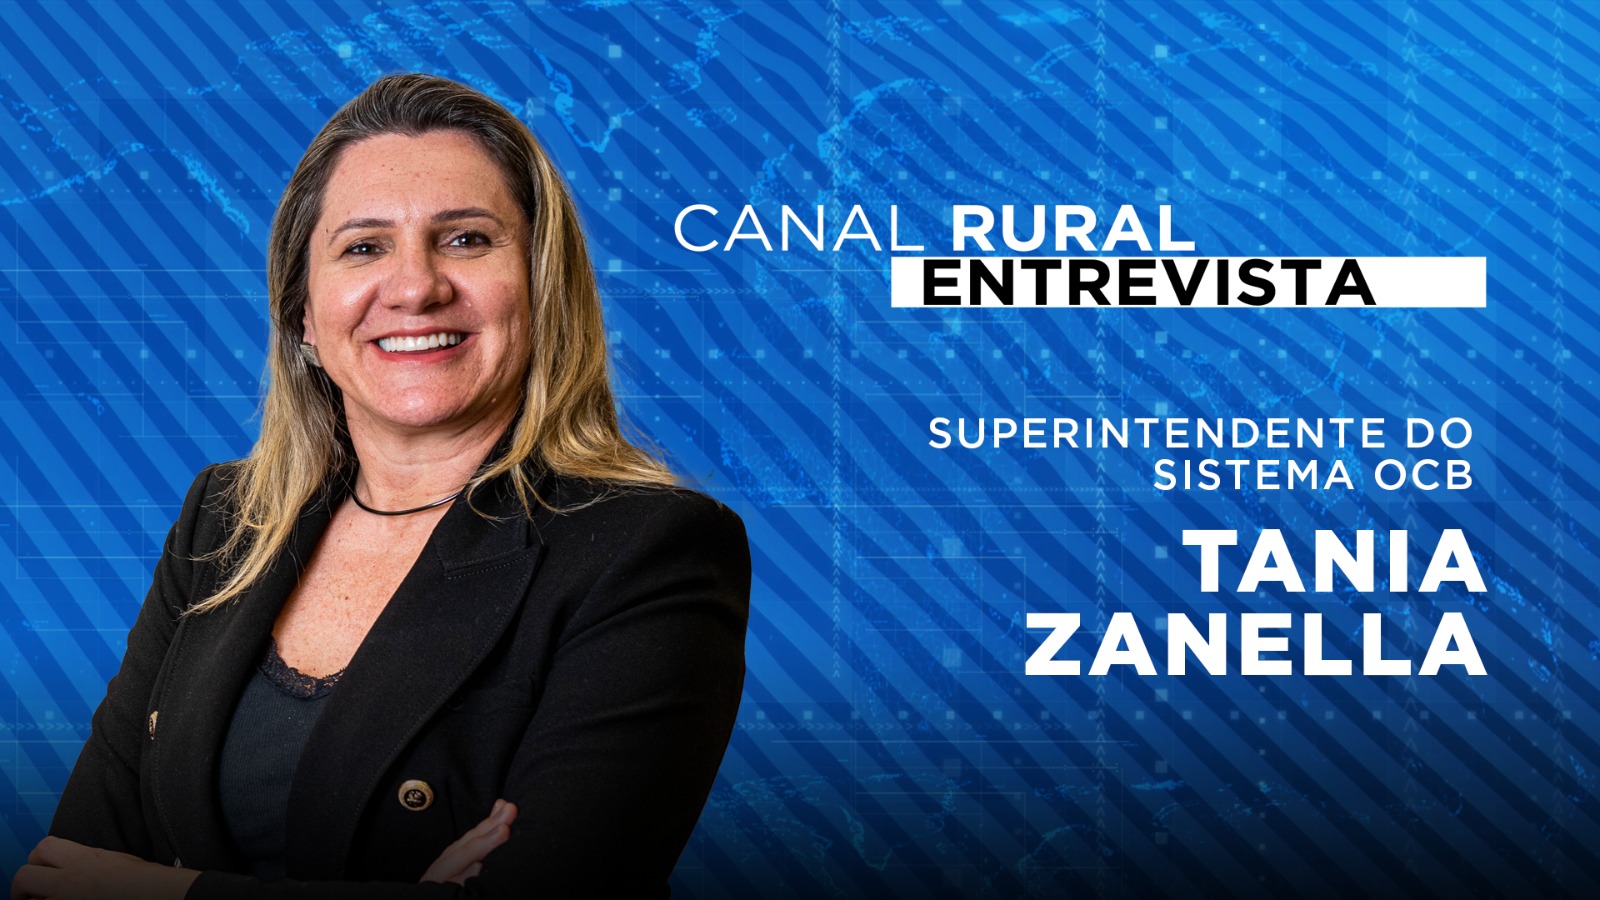 Tania Zanella, superintendente do Sistema OCB - Desafios do Modelo Cooperativista